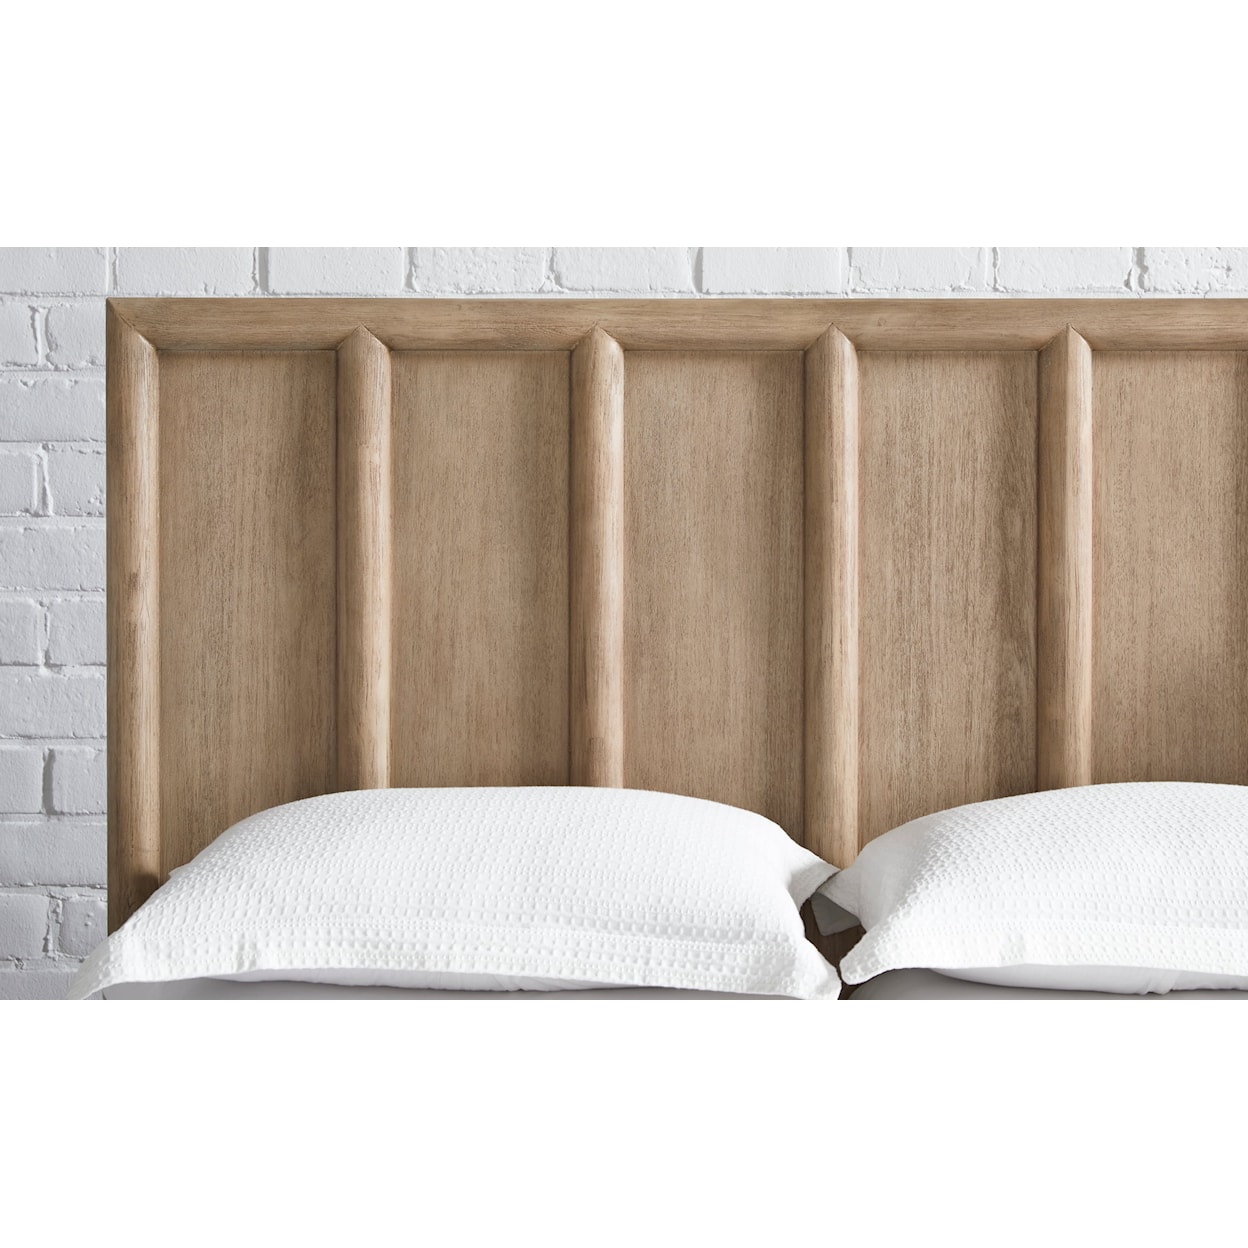 Modus International Dorsey Granola Queen Panel Storage Bed